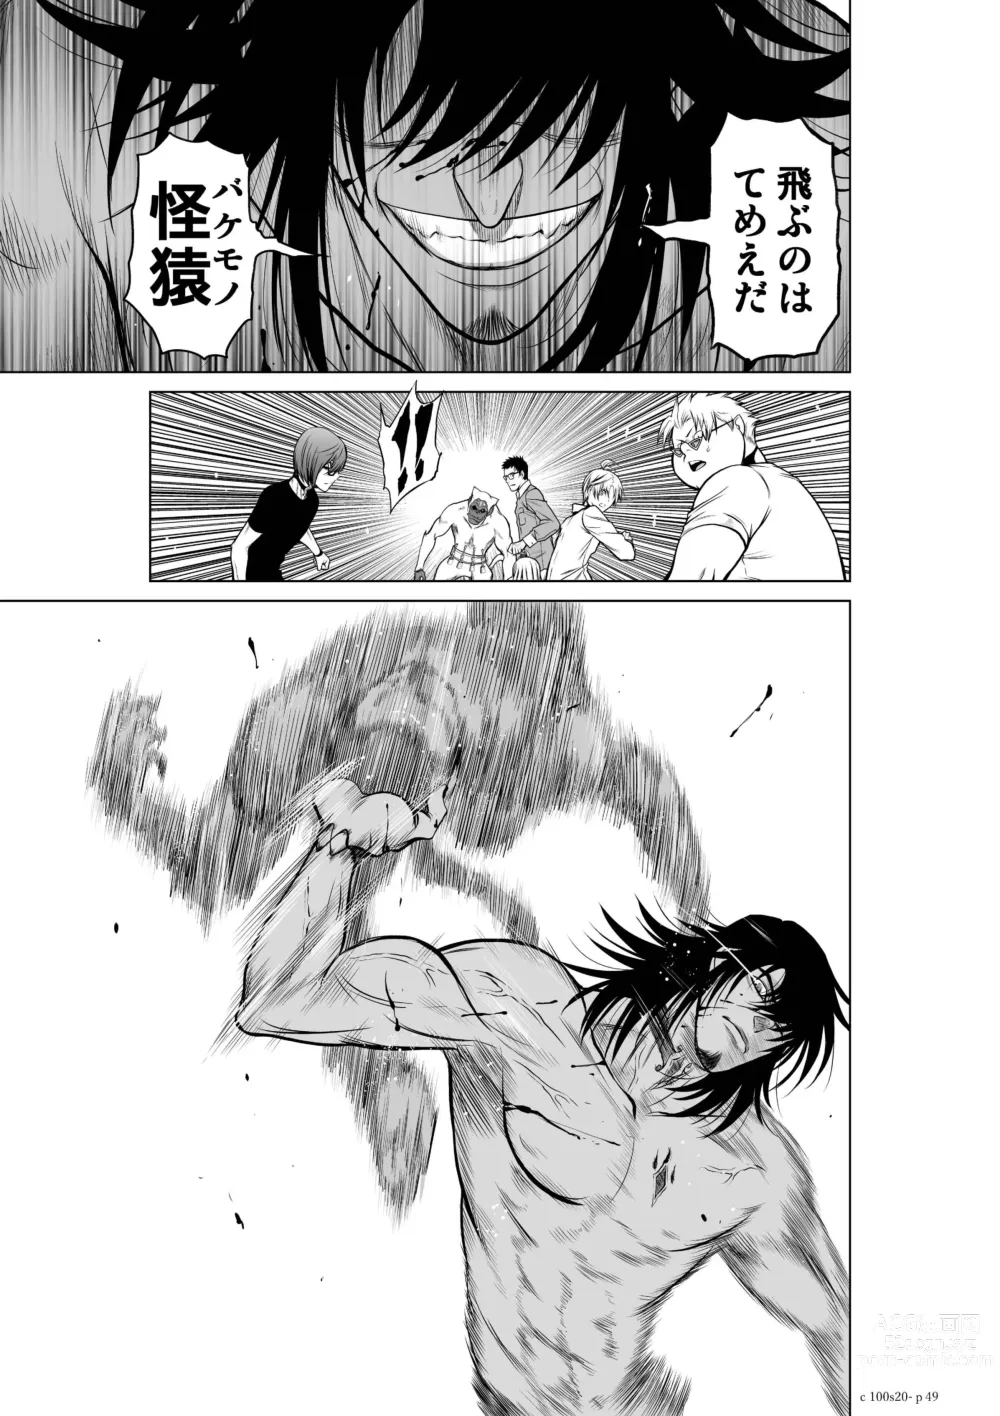 Page 49 of manga Chijou Hyakkai Ch.20